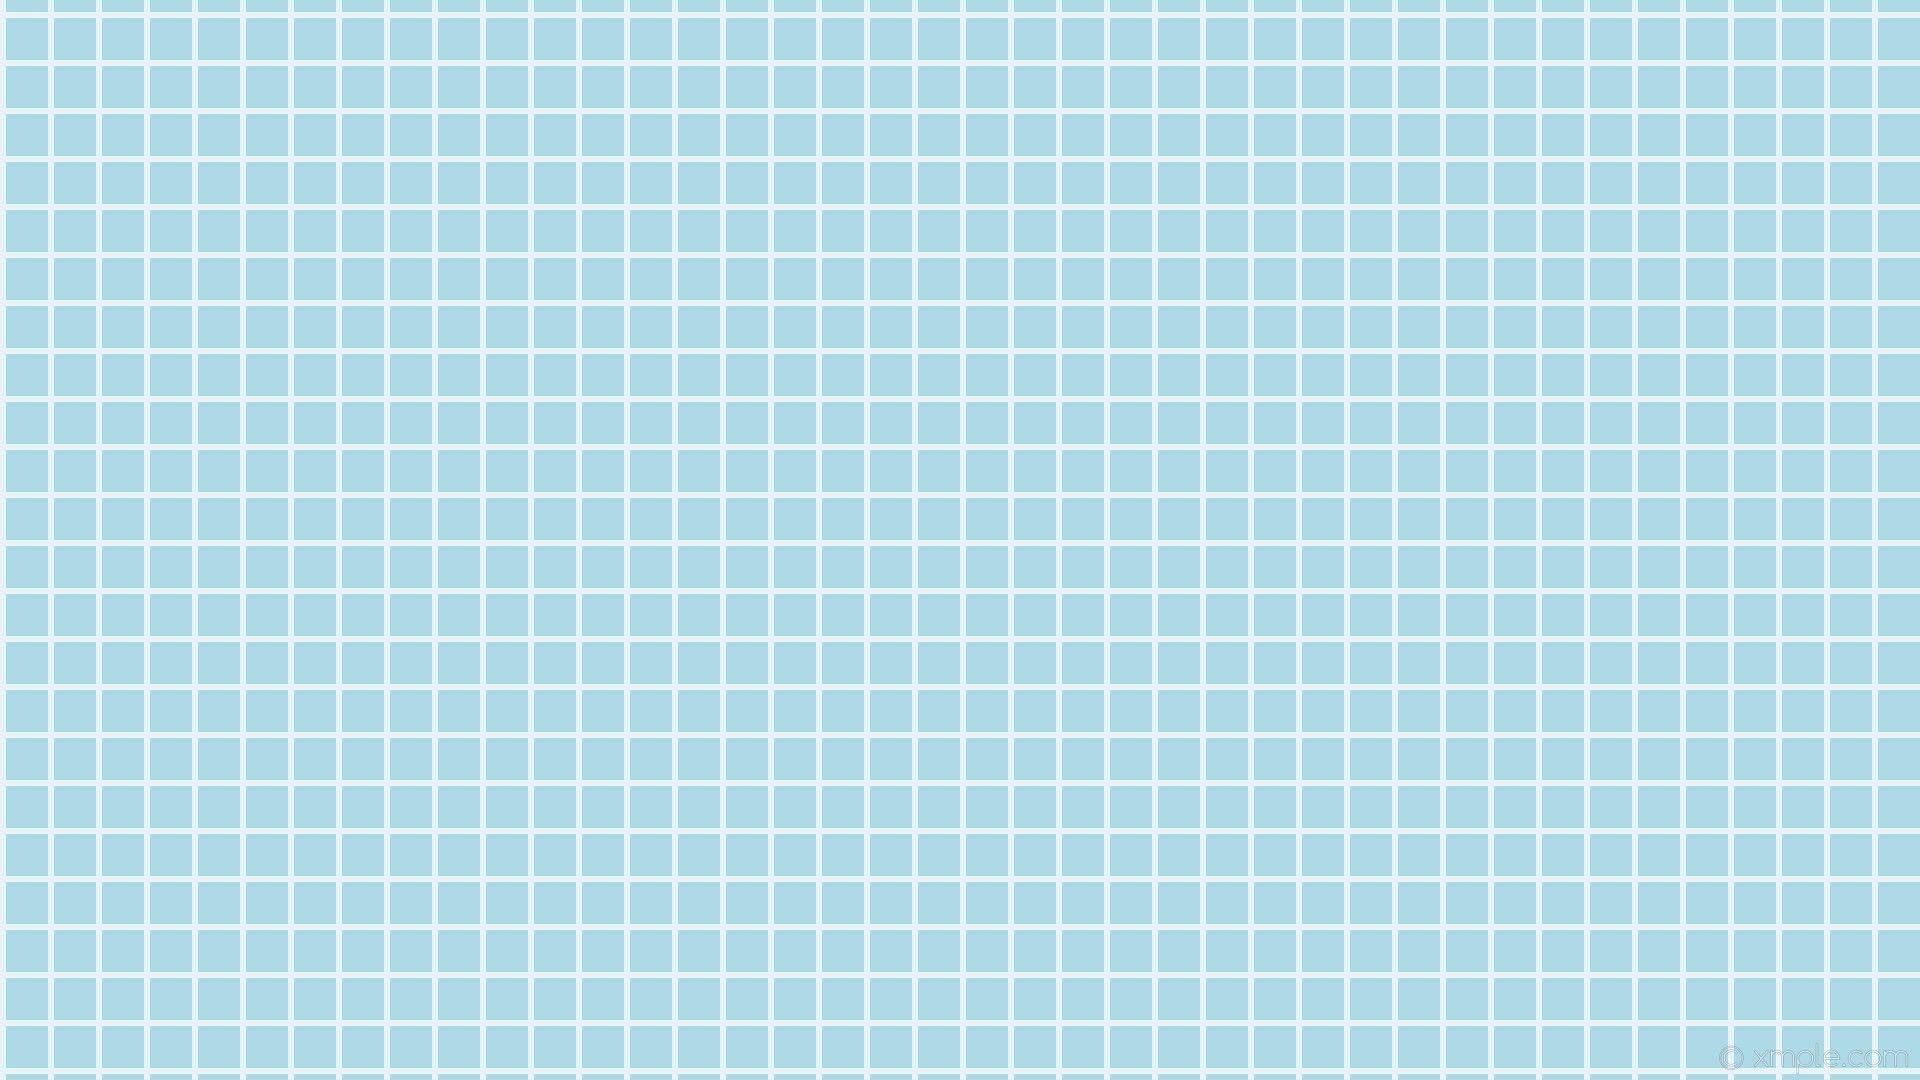 Aesthetic Minimal Black Grid Pattern Wallpaper Stock Illustration  1865577280  Shutterstock